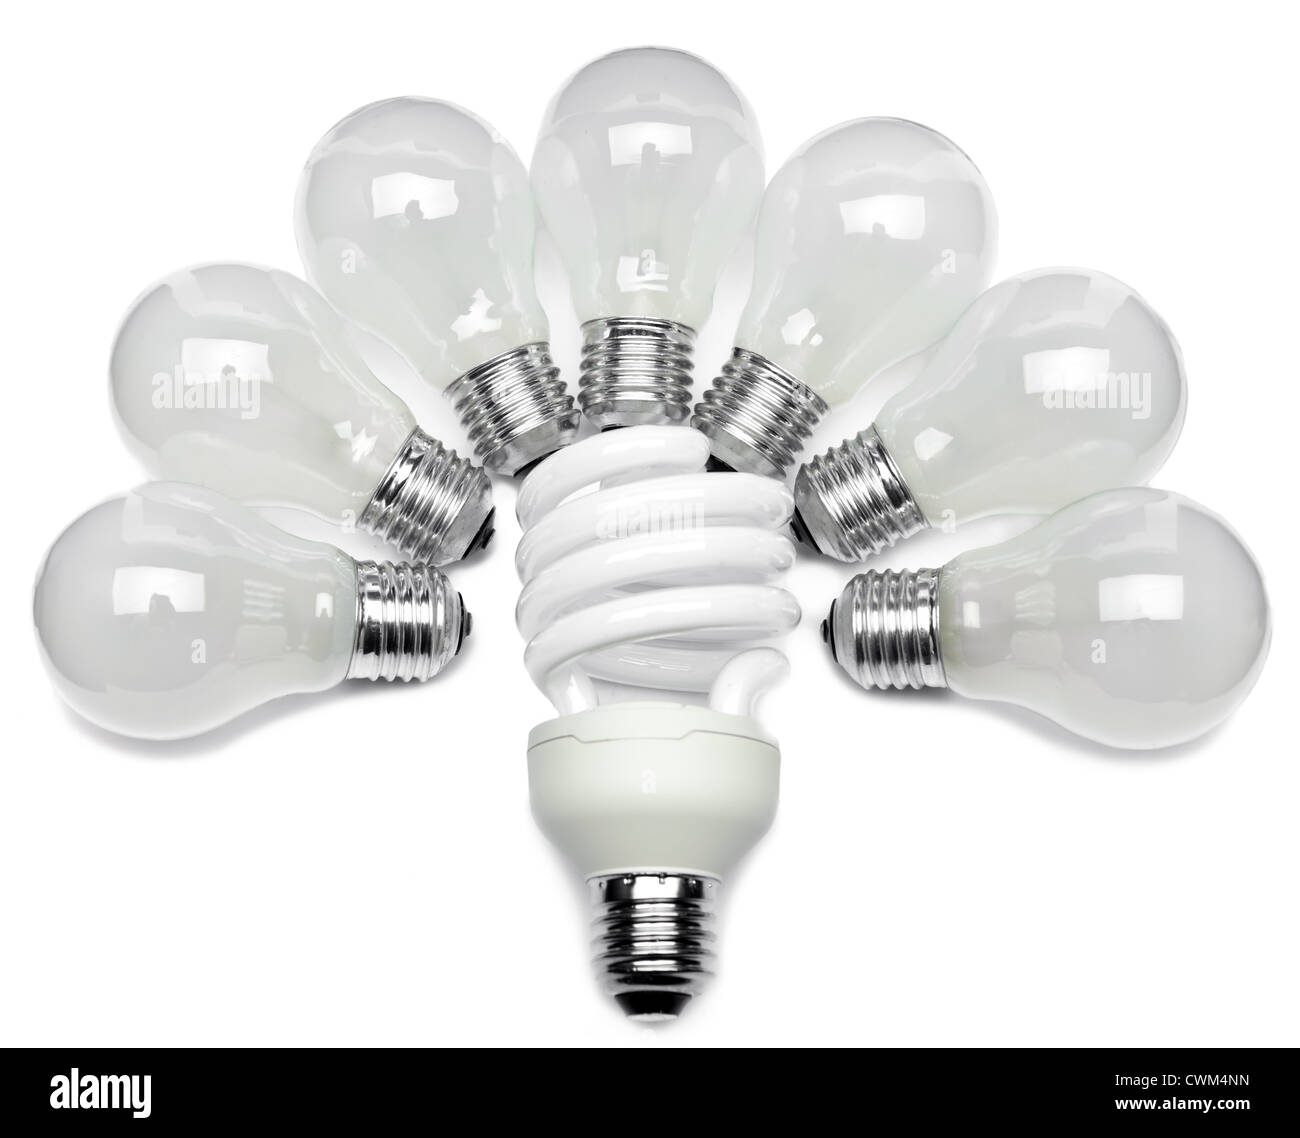 Power saving up electric lamp Stock Photo